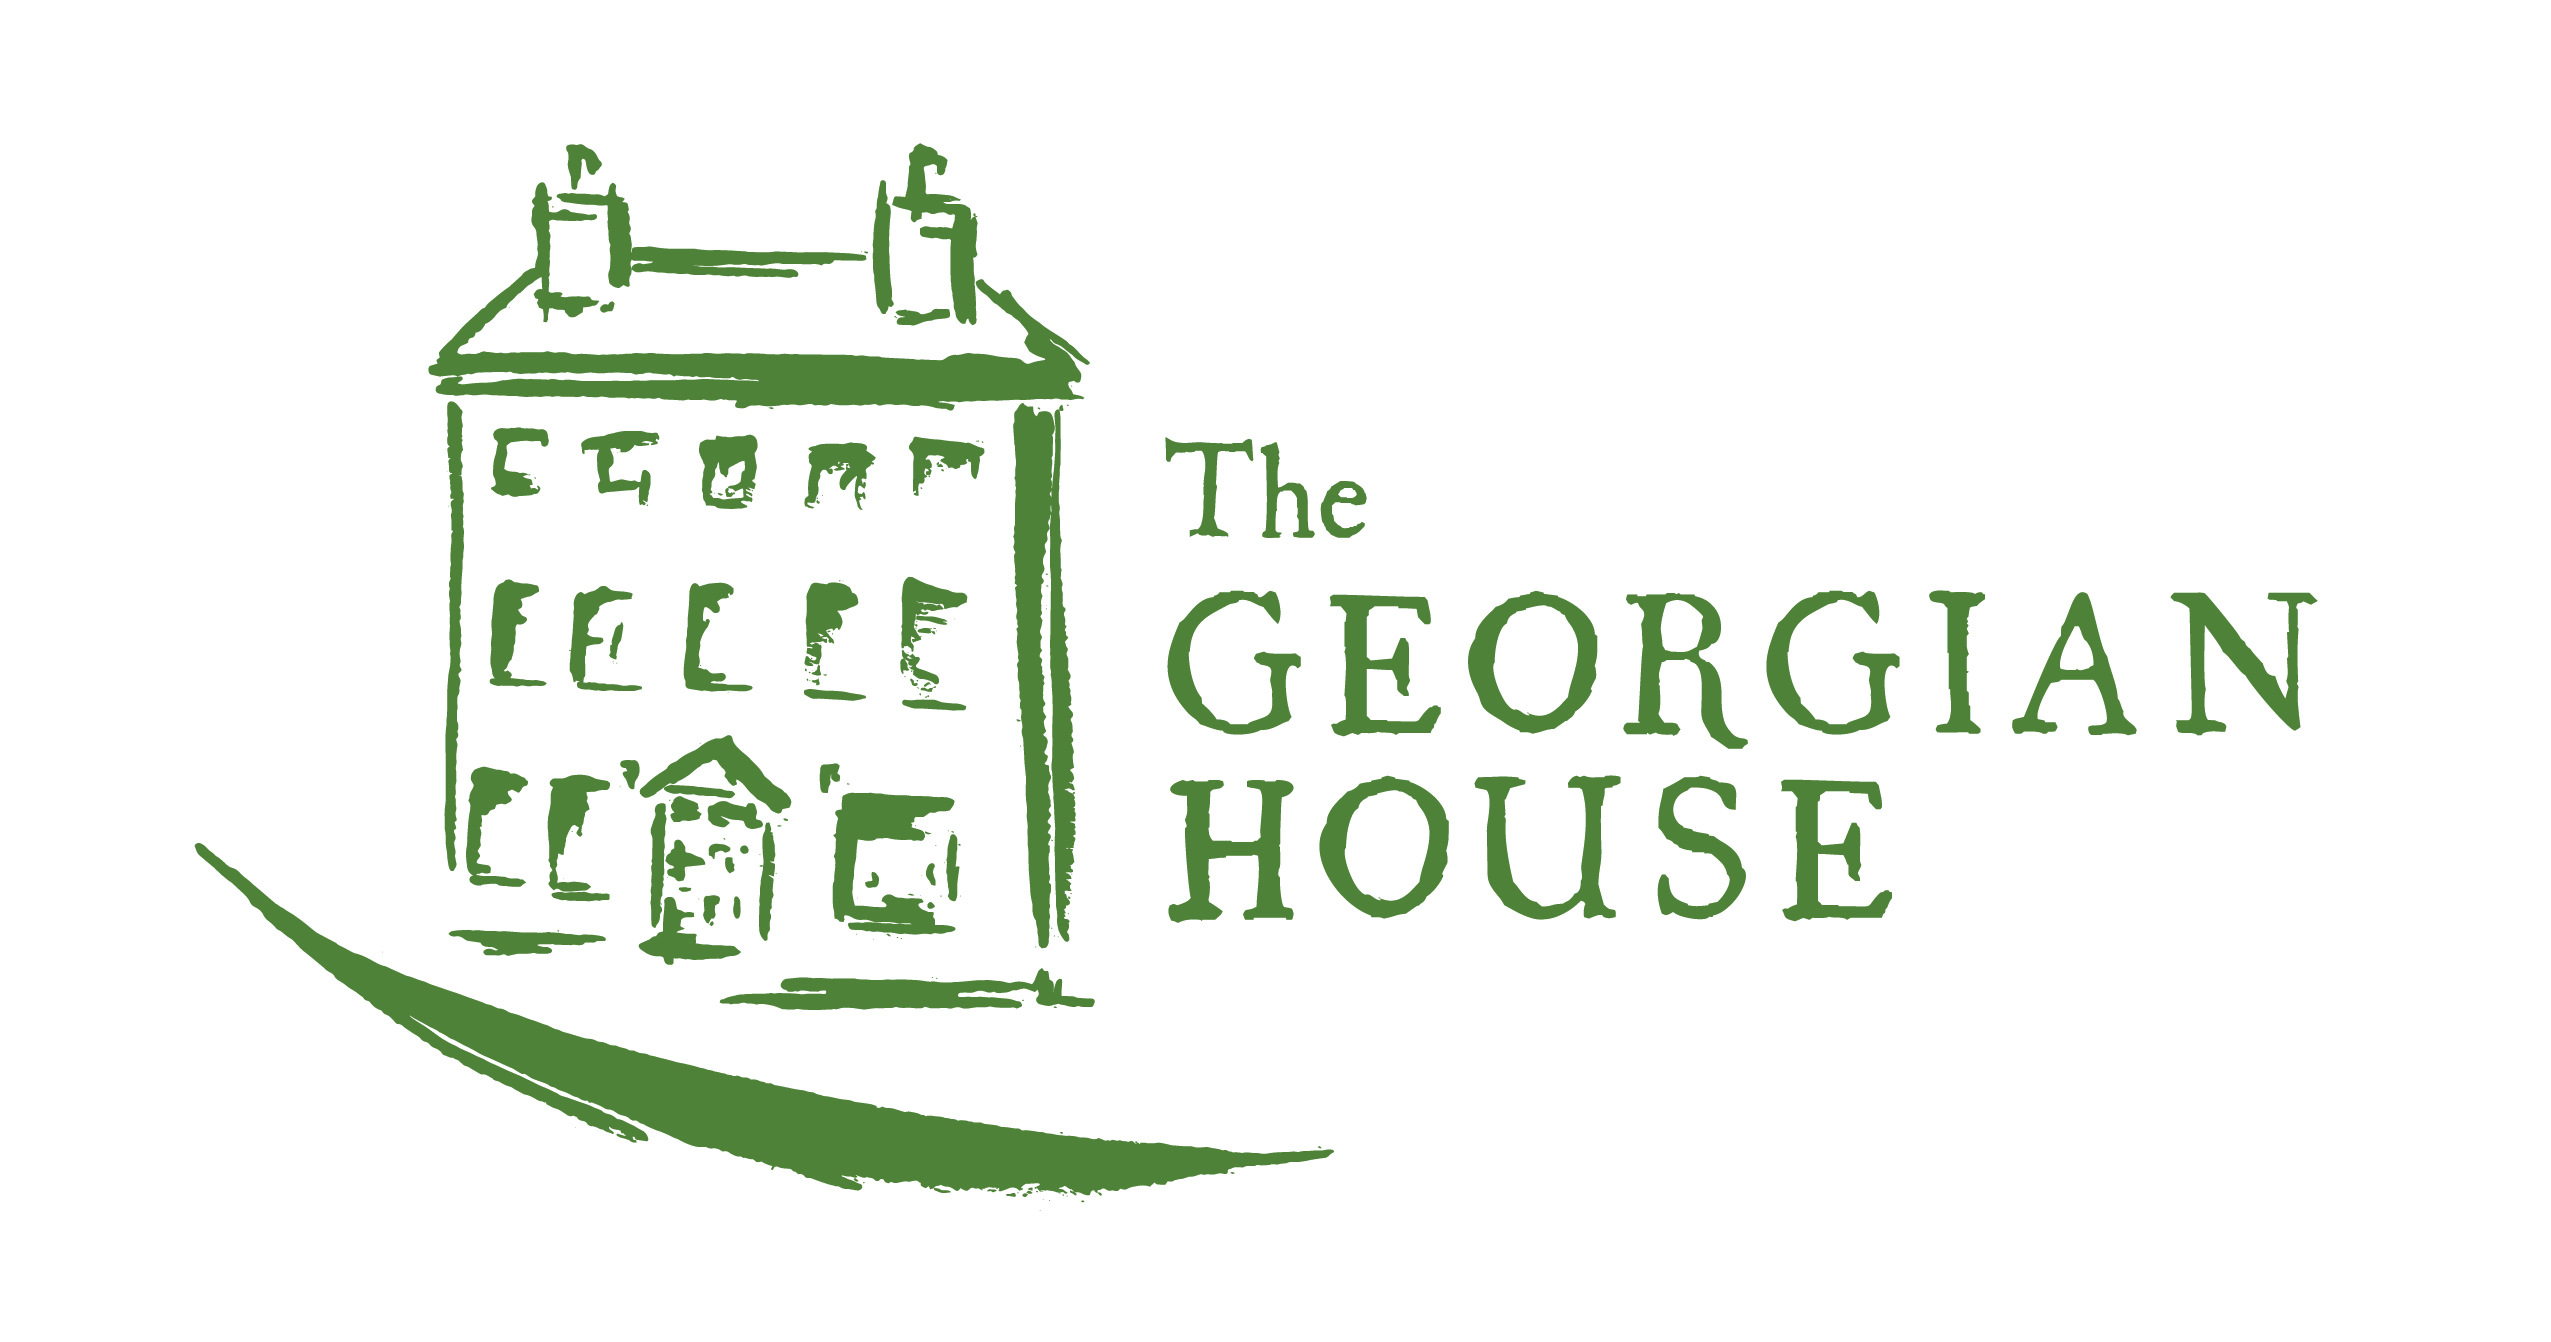 The Georgian Hotel logo